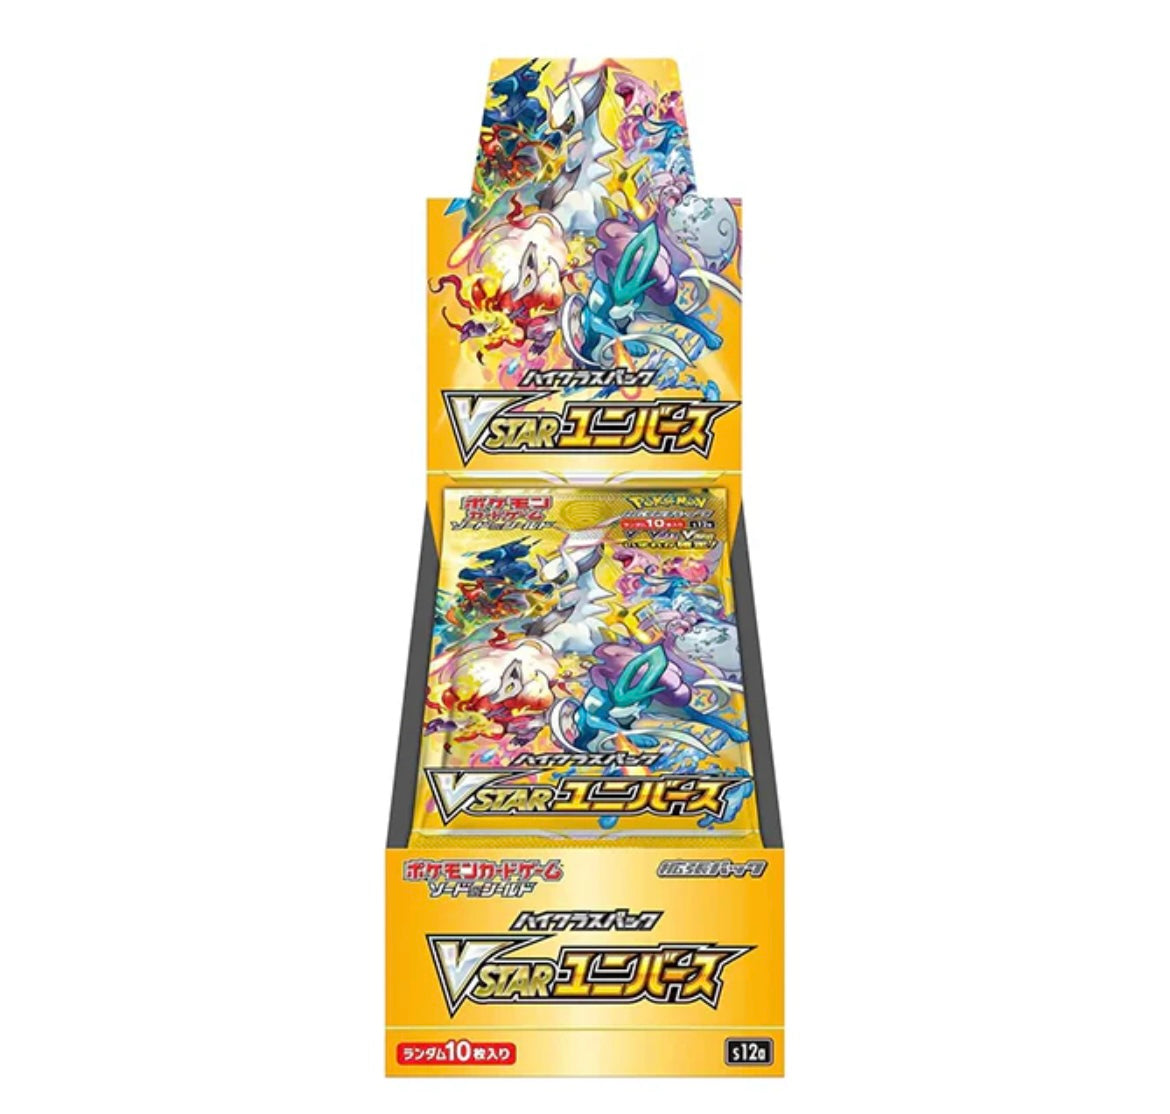 Pokémon Vstar Universe Booster Pack Japanese